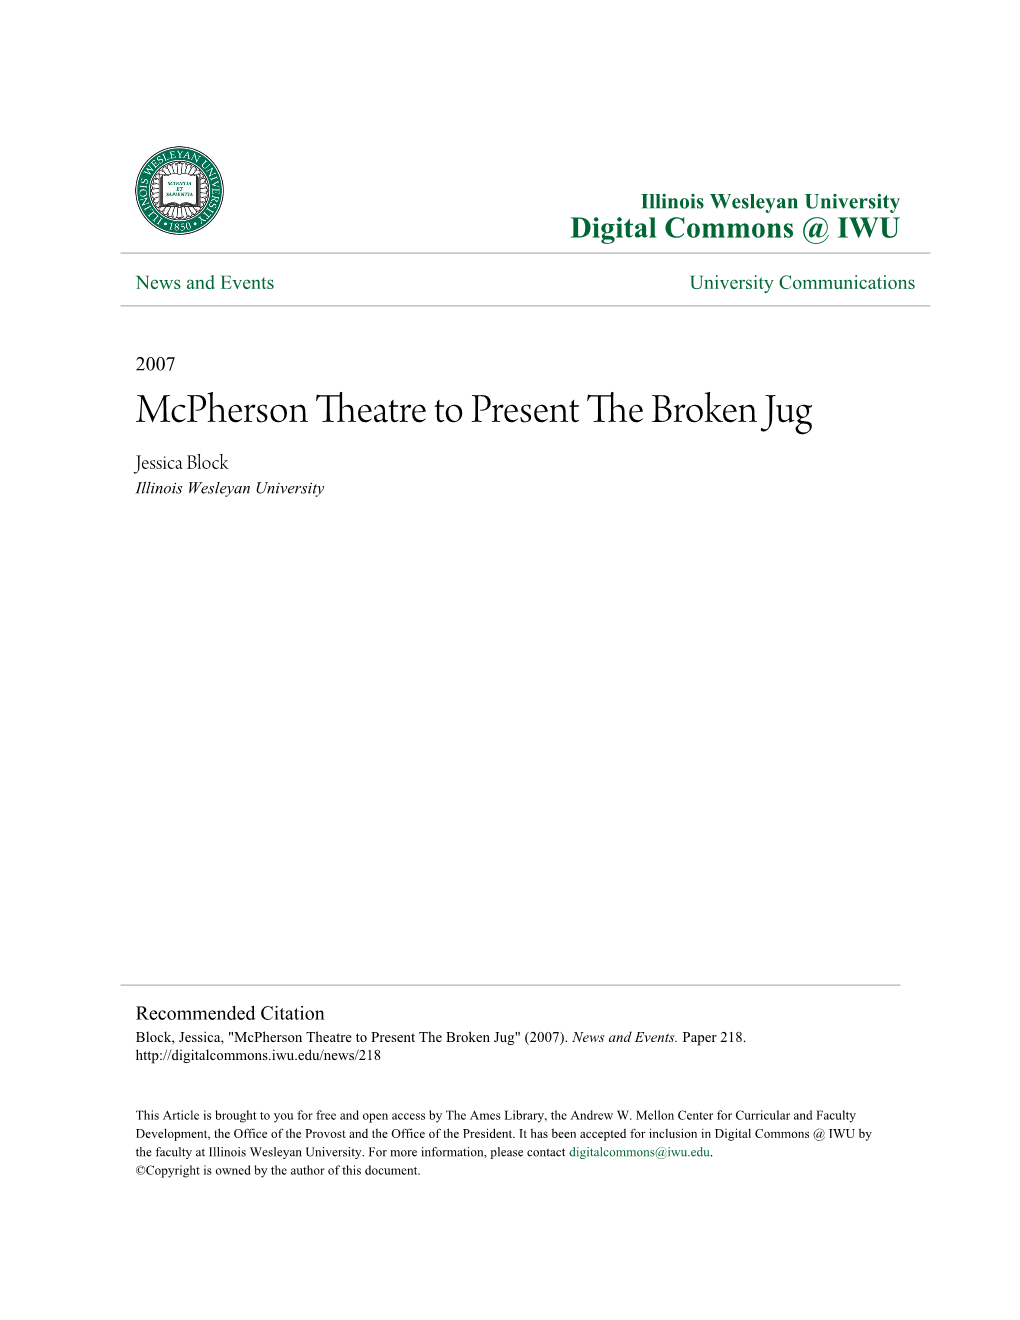 Mcpherson Theatre to Present the Broken Jug" (2007)